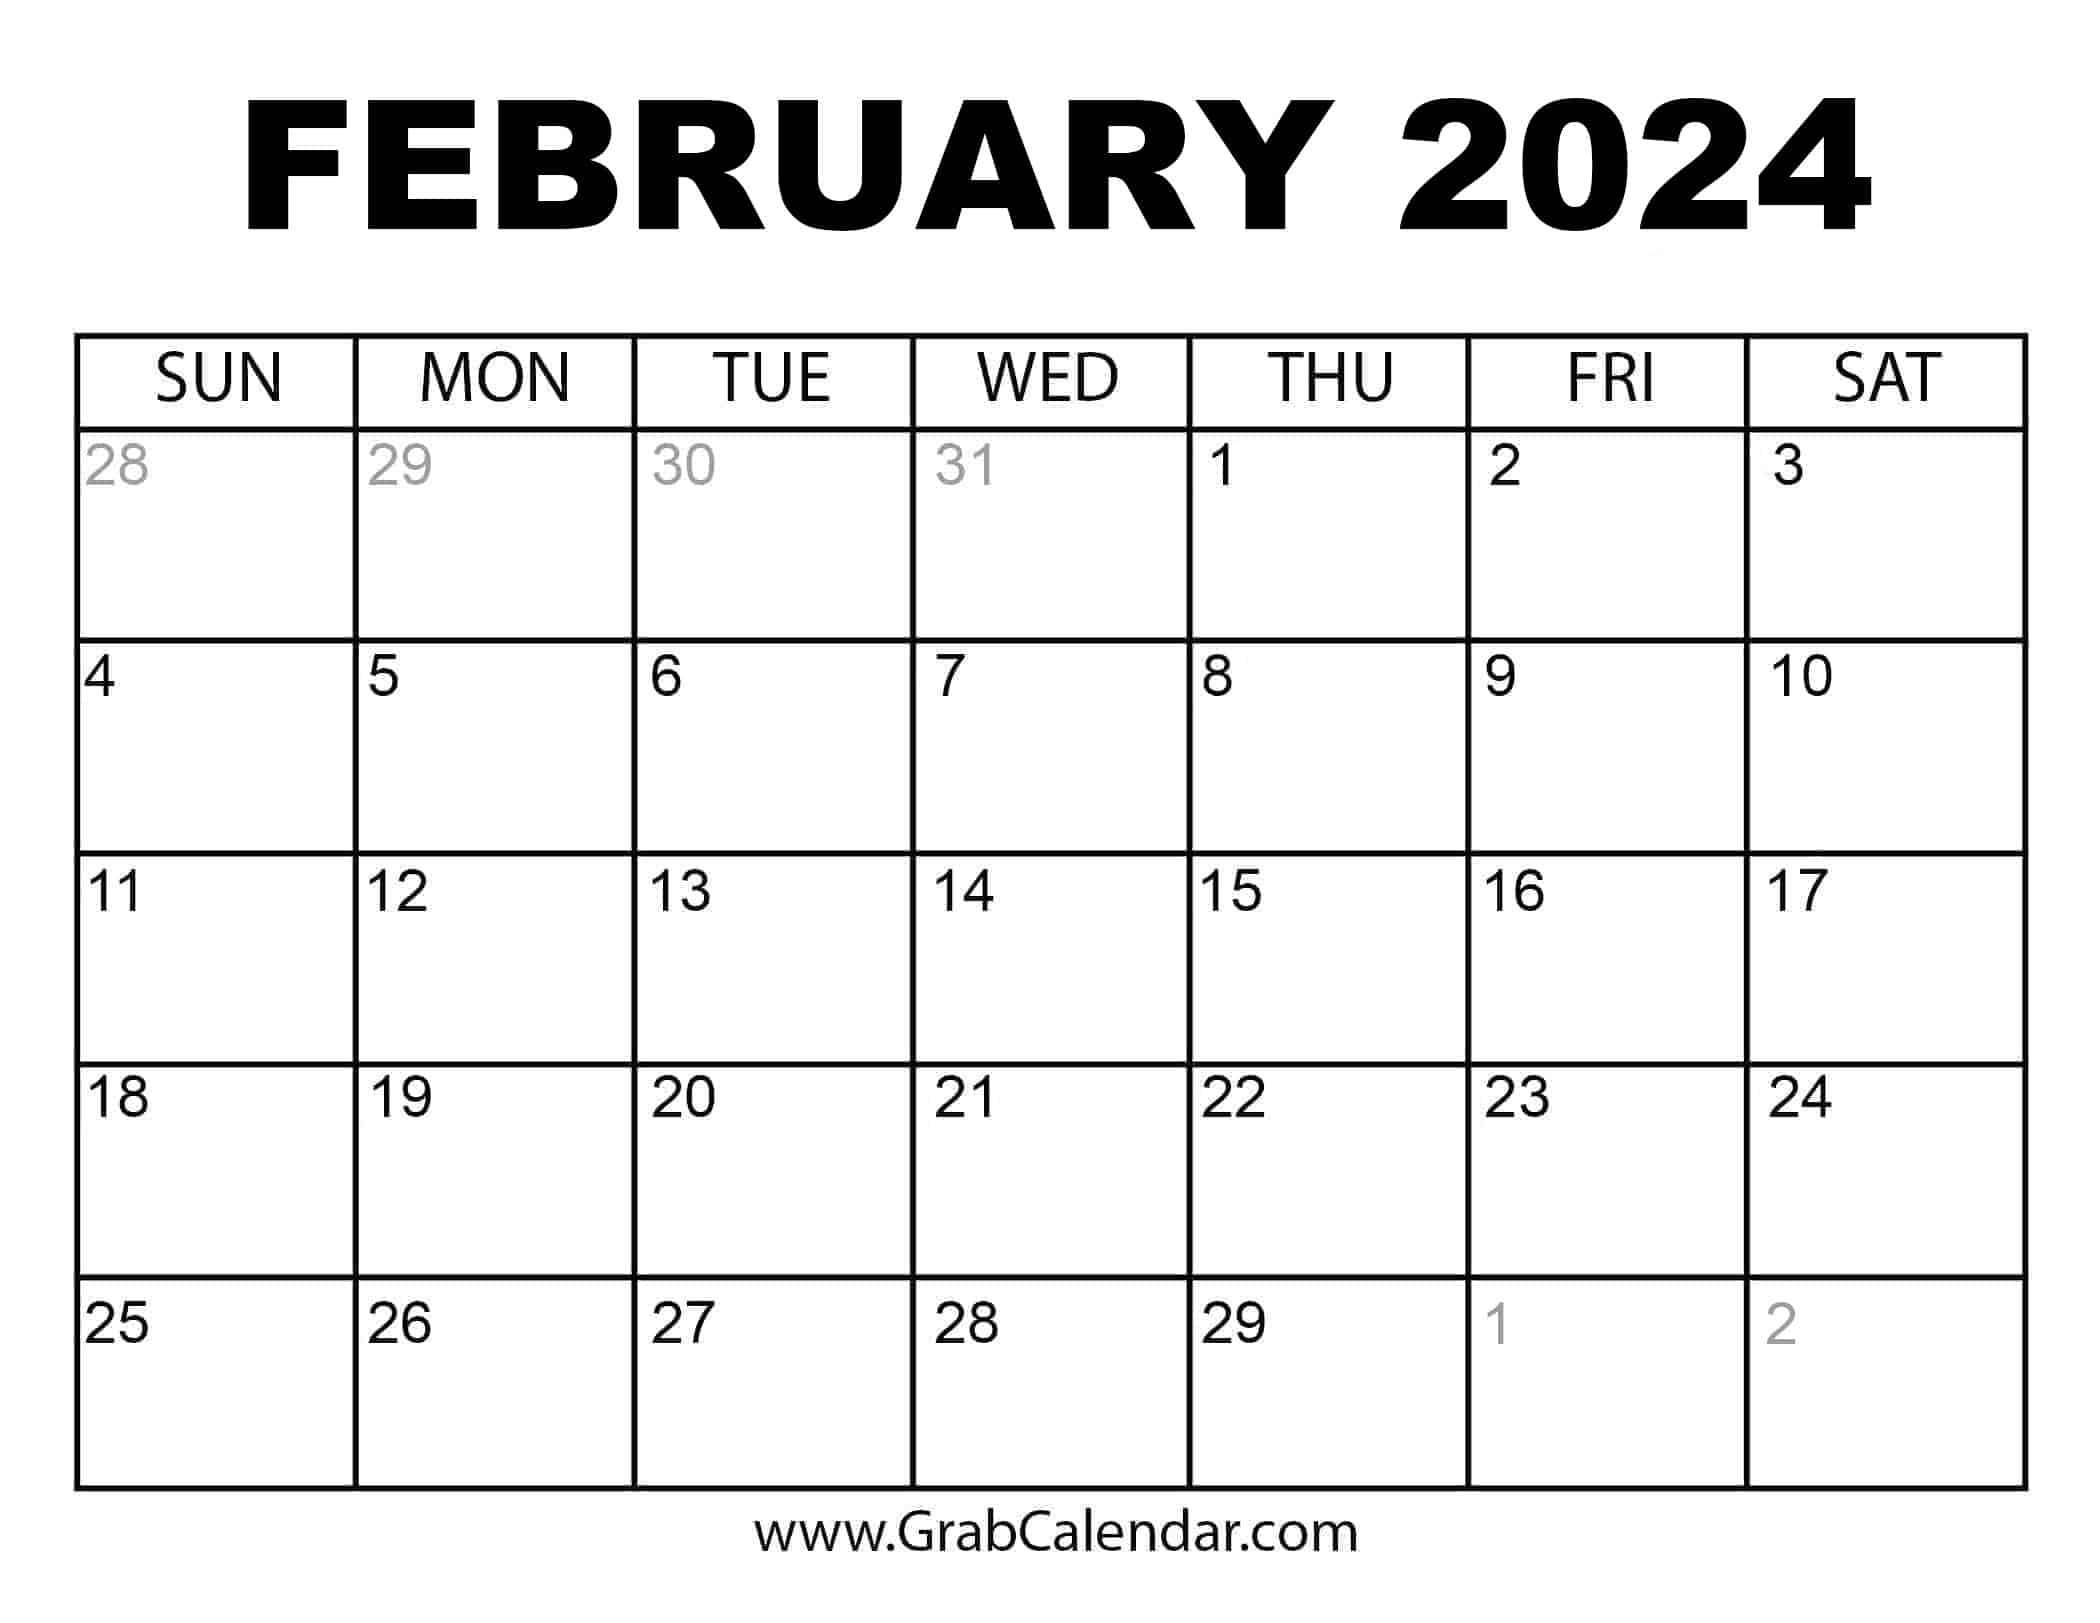 February 2024 Calendar To Print Lani Shanta - Free Printable 2024 Monthly Calendar February